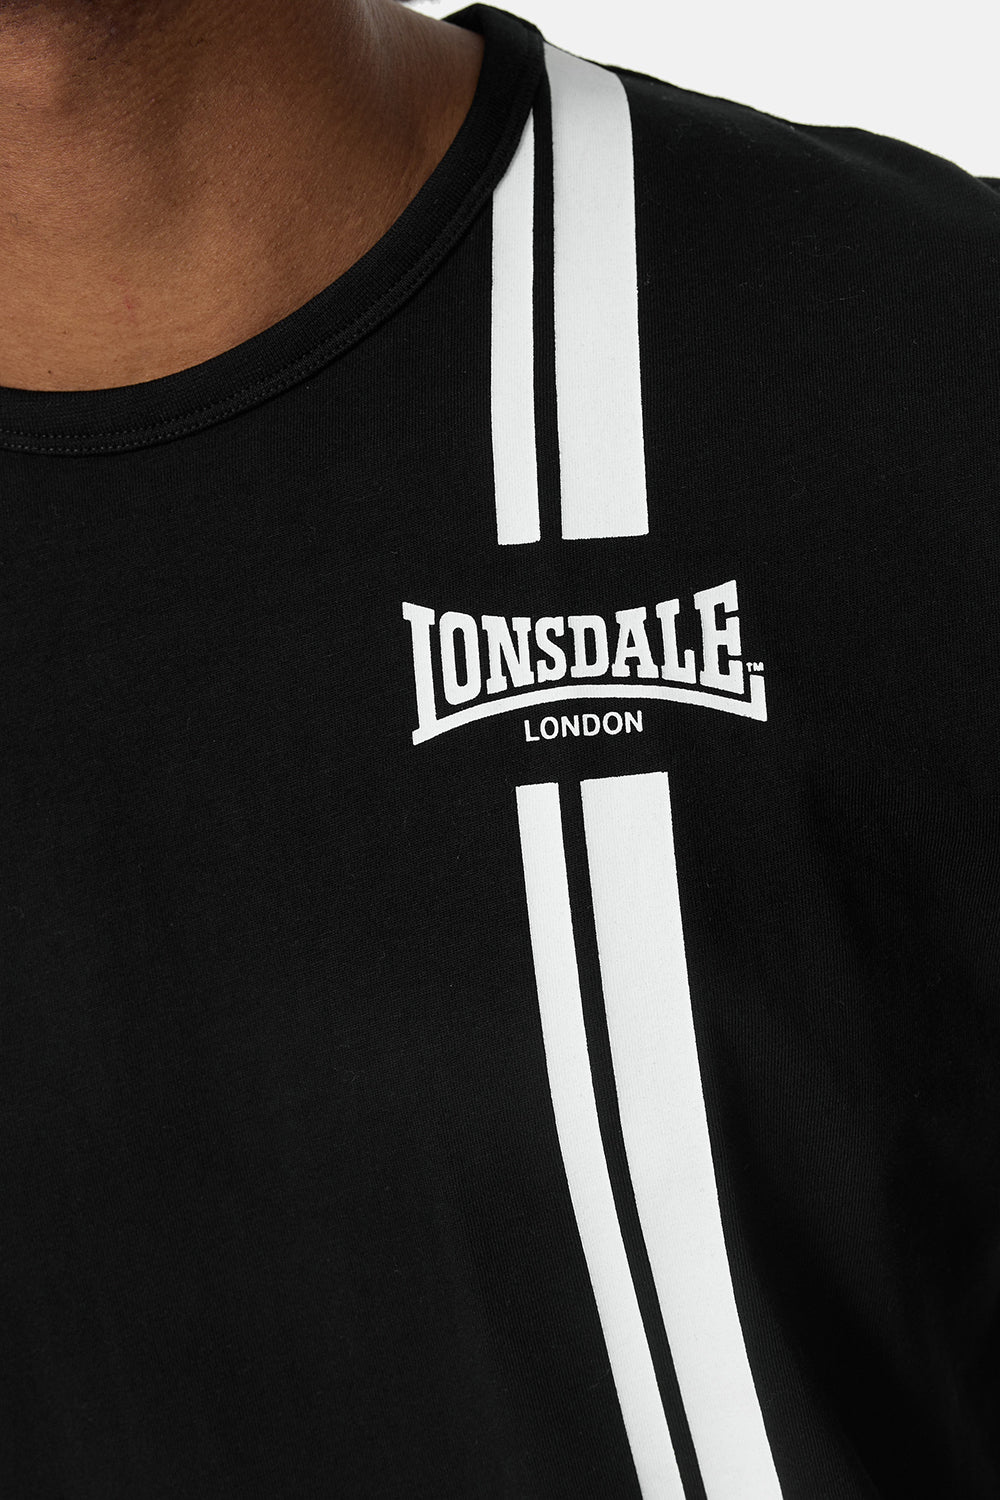 Lonsdale Inverbroom T-Shirt Black